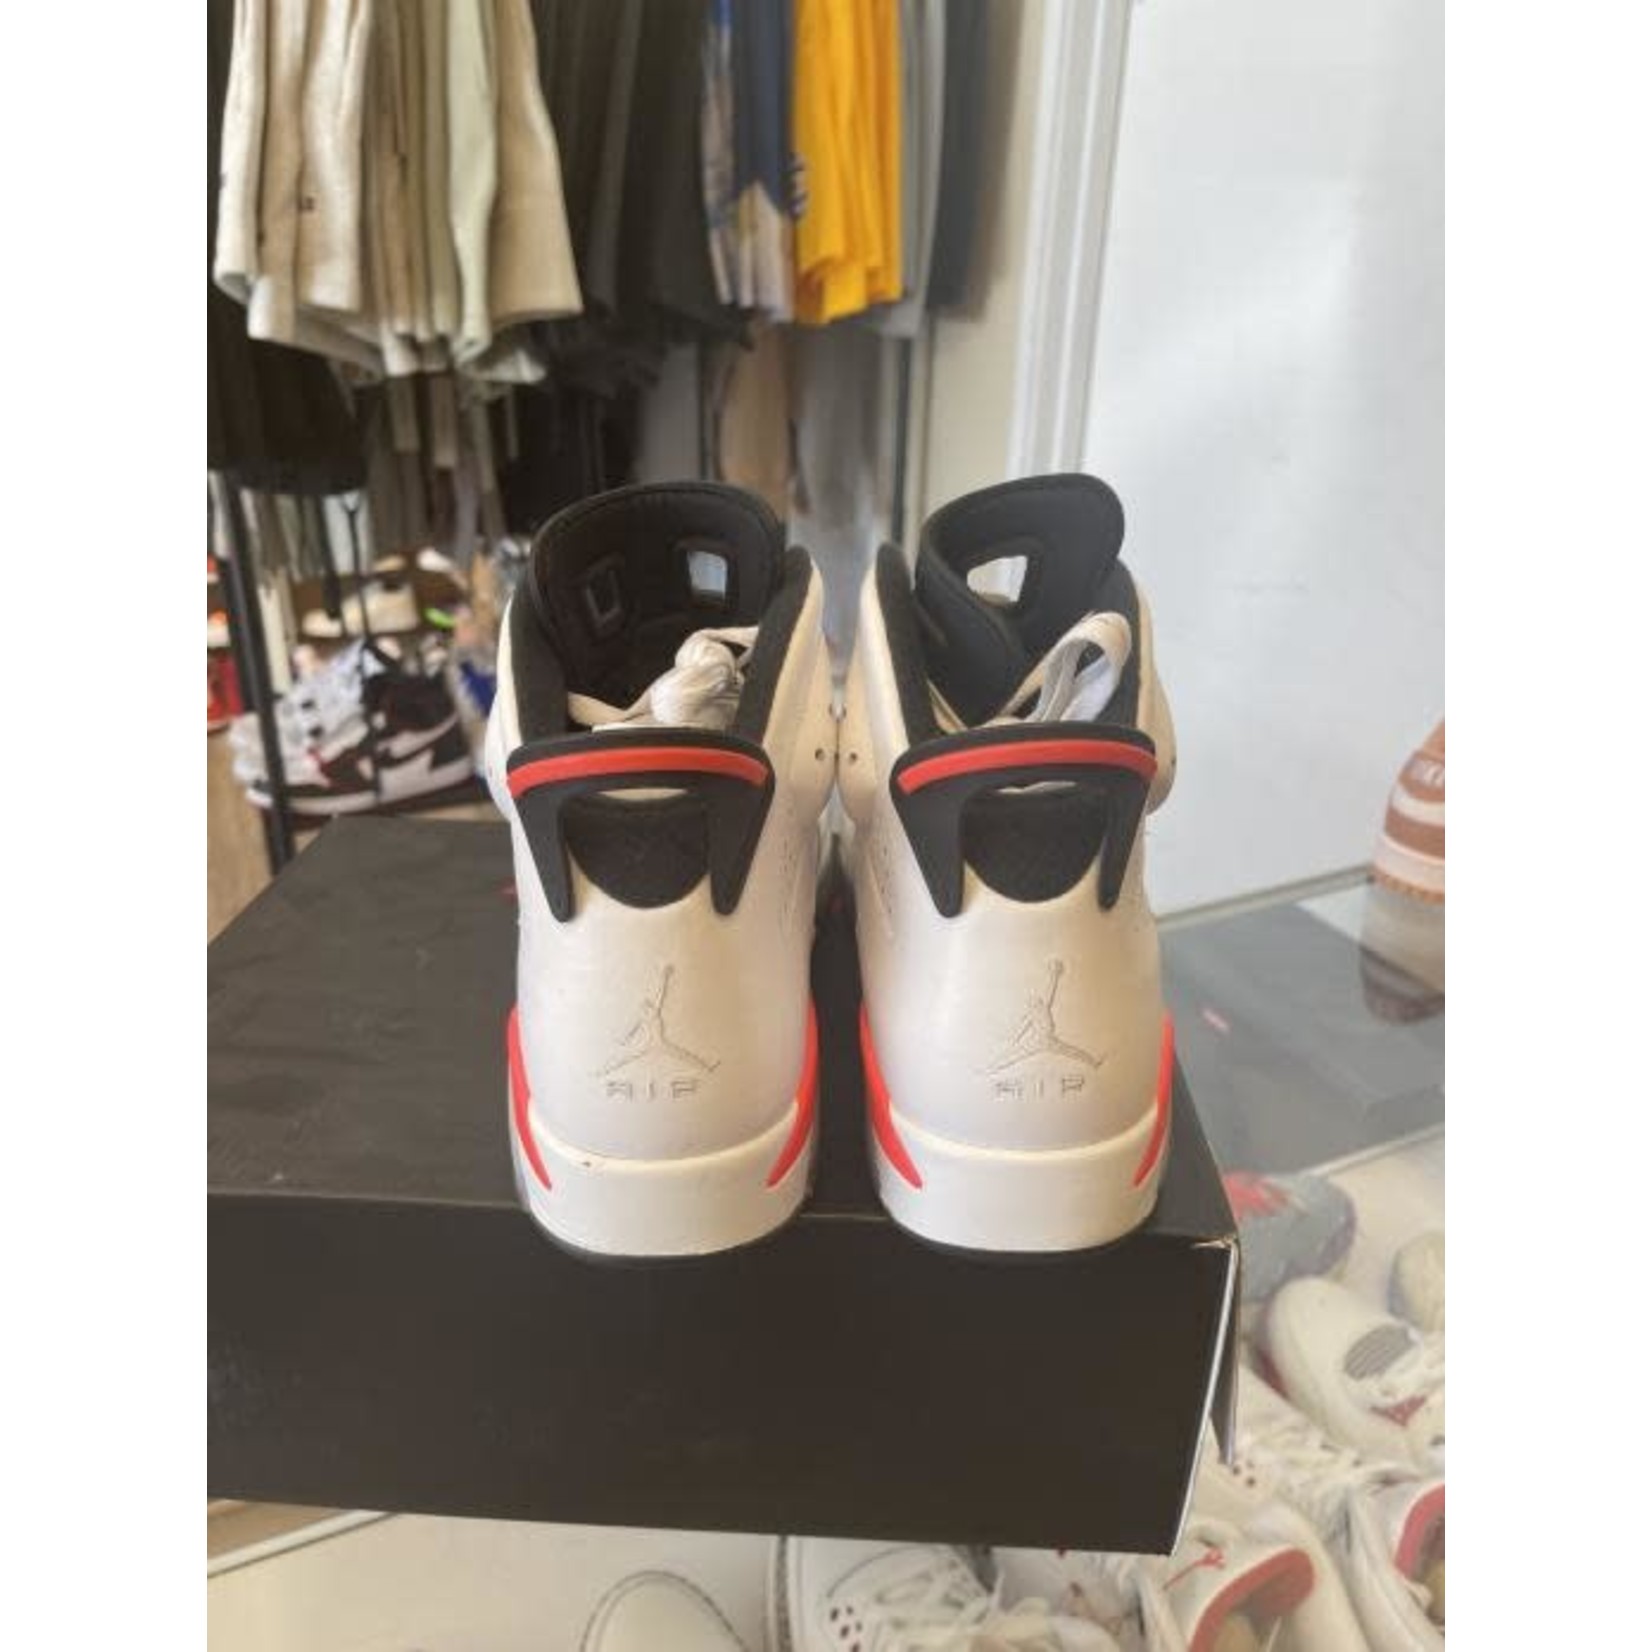 Jordan Jordan 6 Retro Infrared White (2014) Size 10.5, PREOWNED